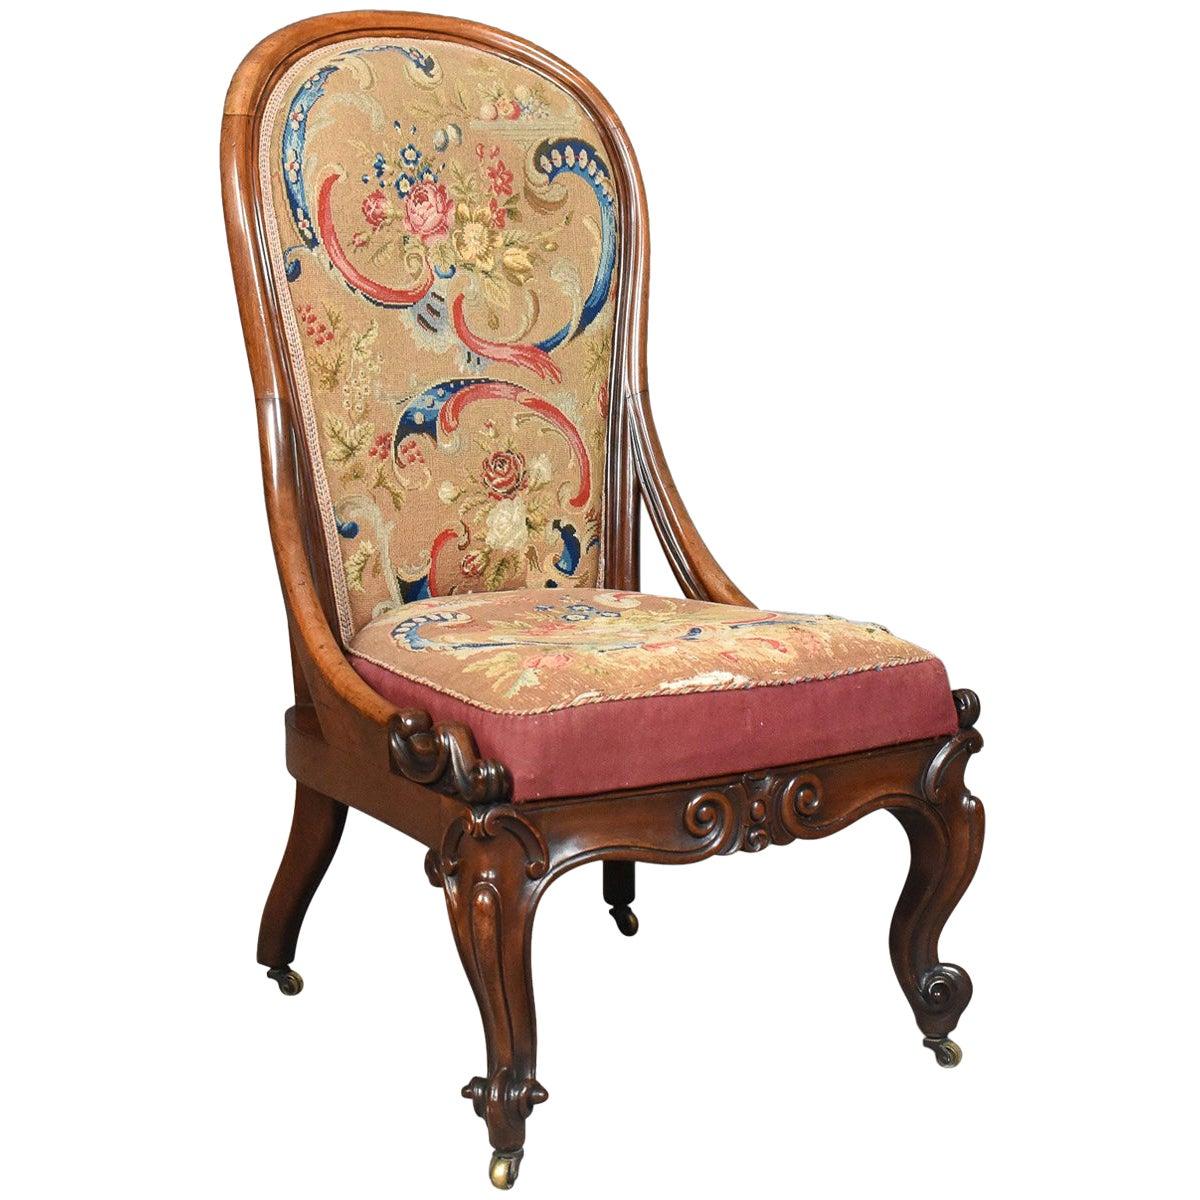 Antique Nursing Chair, English Walnut Needlepoint Tapestry Victorian, circa 1840